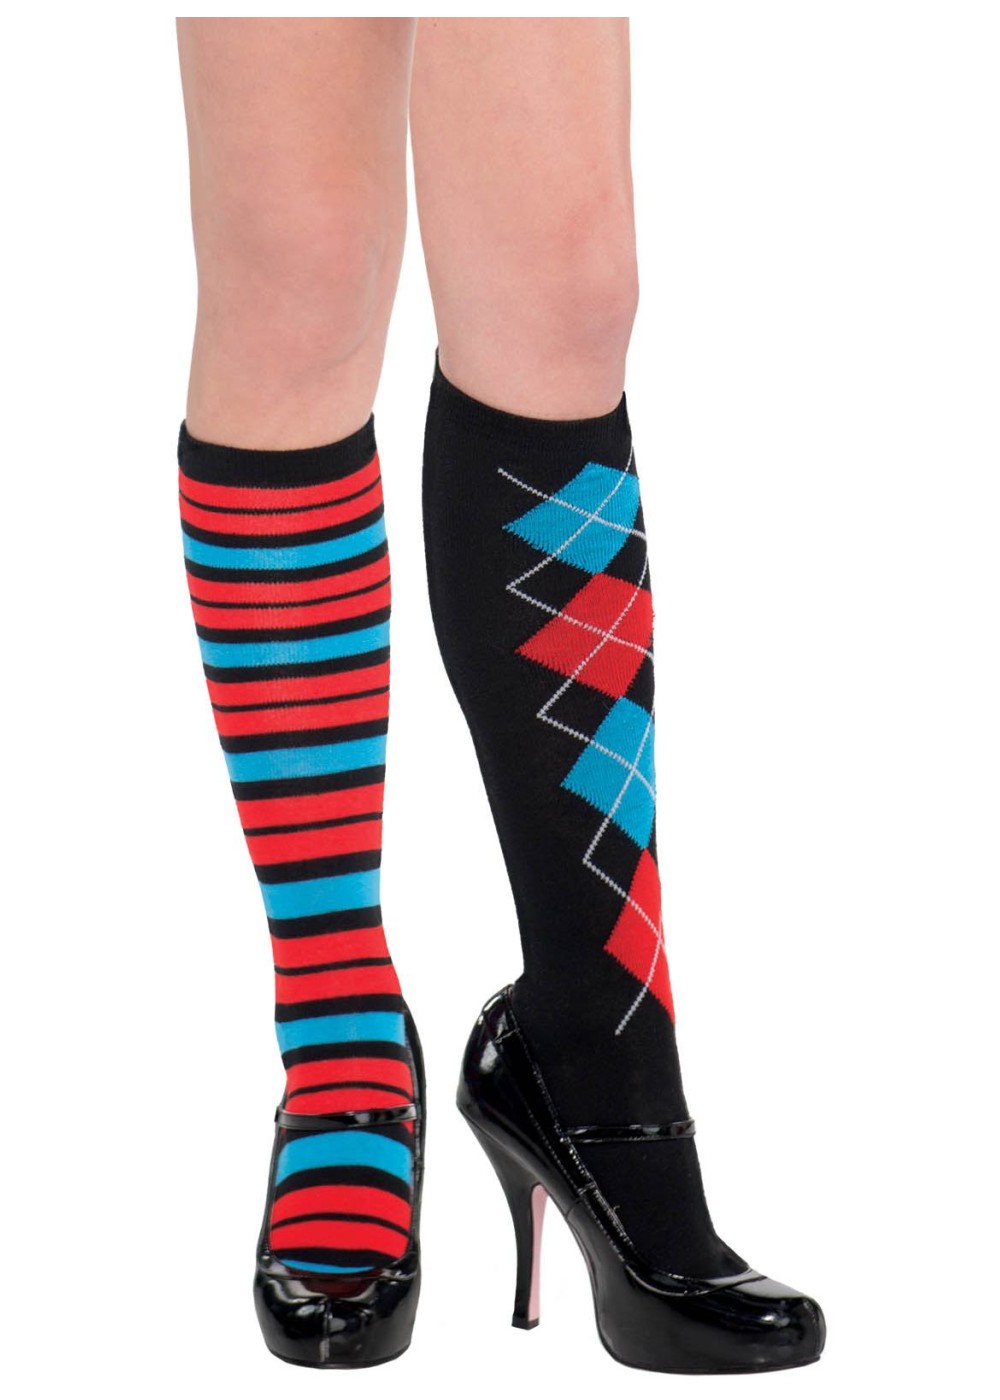 Geek Chic Socks